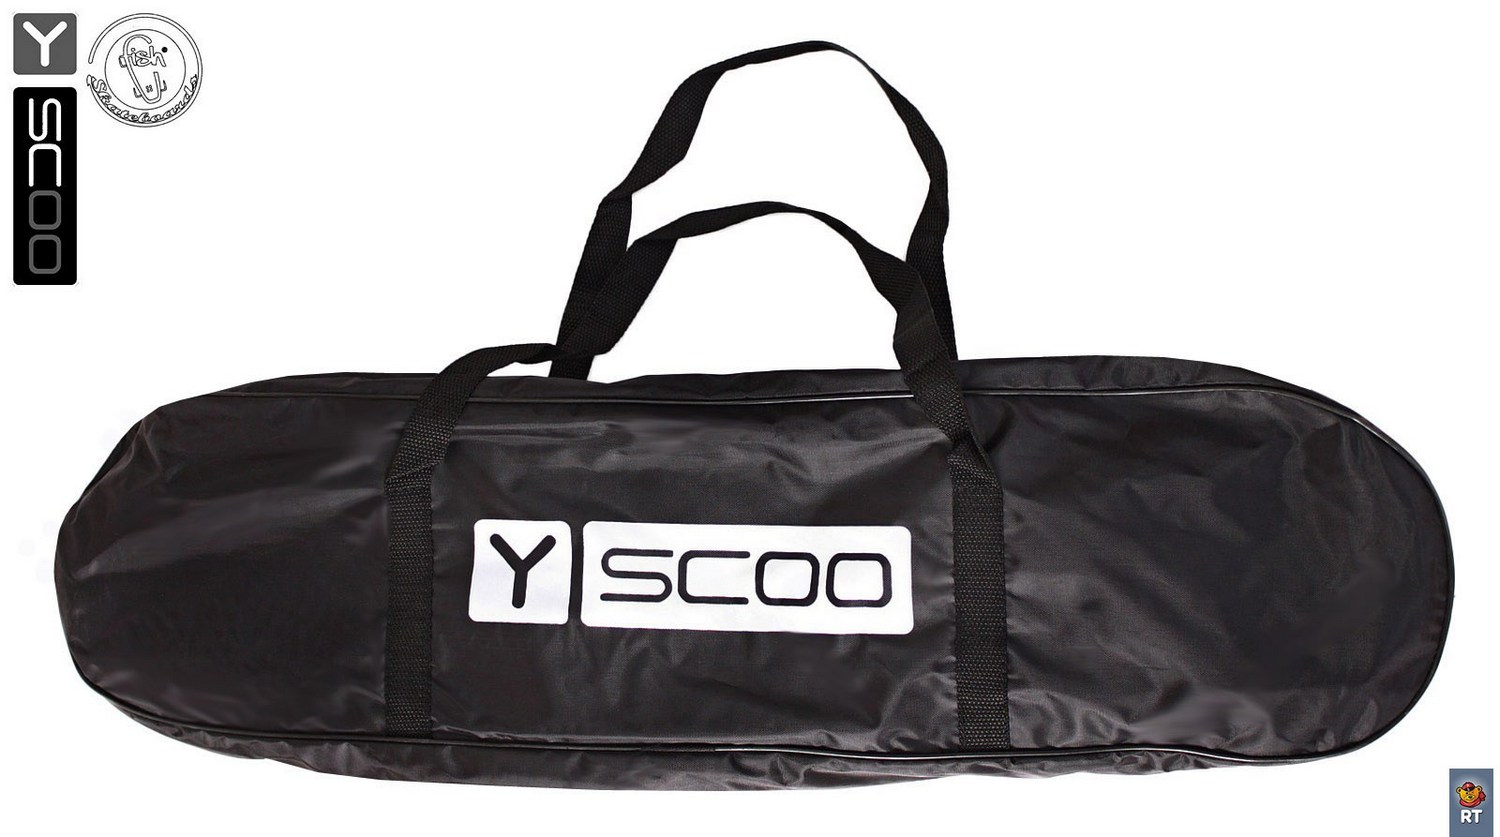 Скейтборд виниловый Y-Scoo Fishskateboard 22" 401-P с сумкой, розовый  